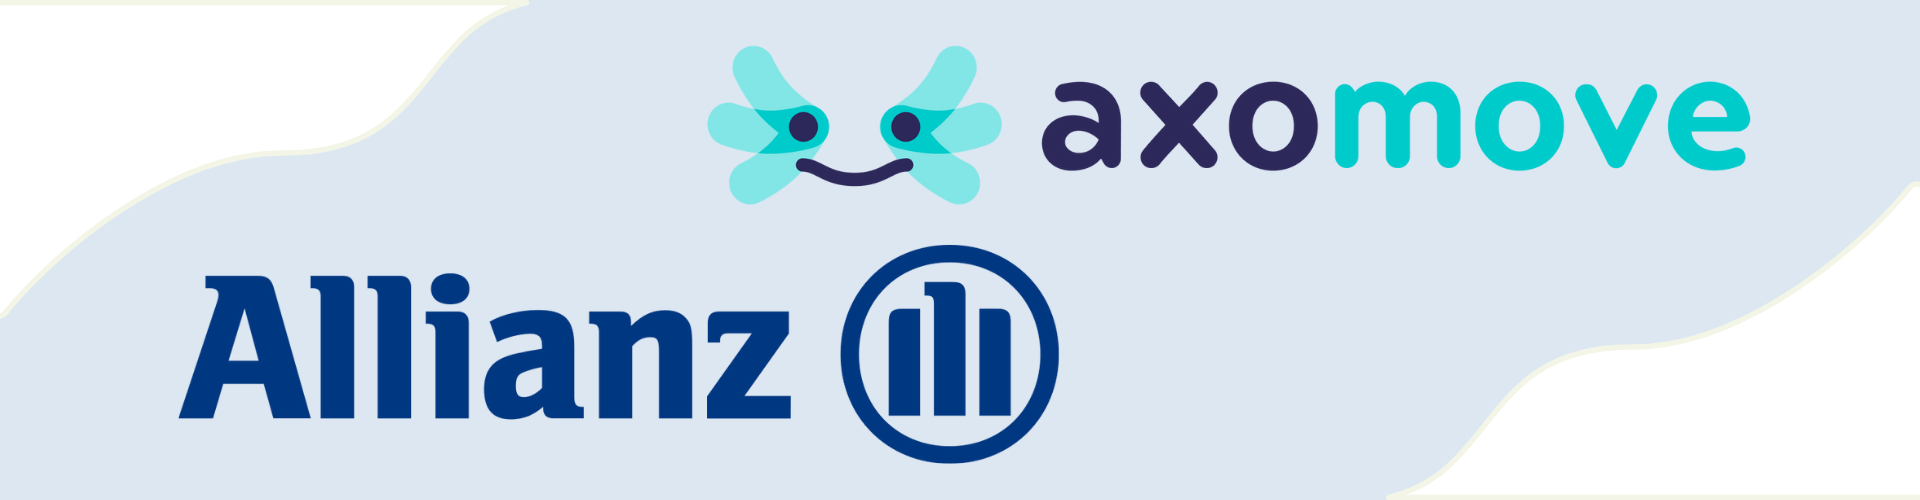 Allianz Axomove version bandeau (1)-1